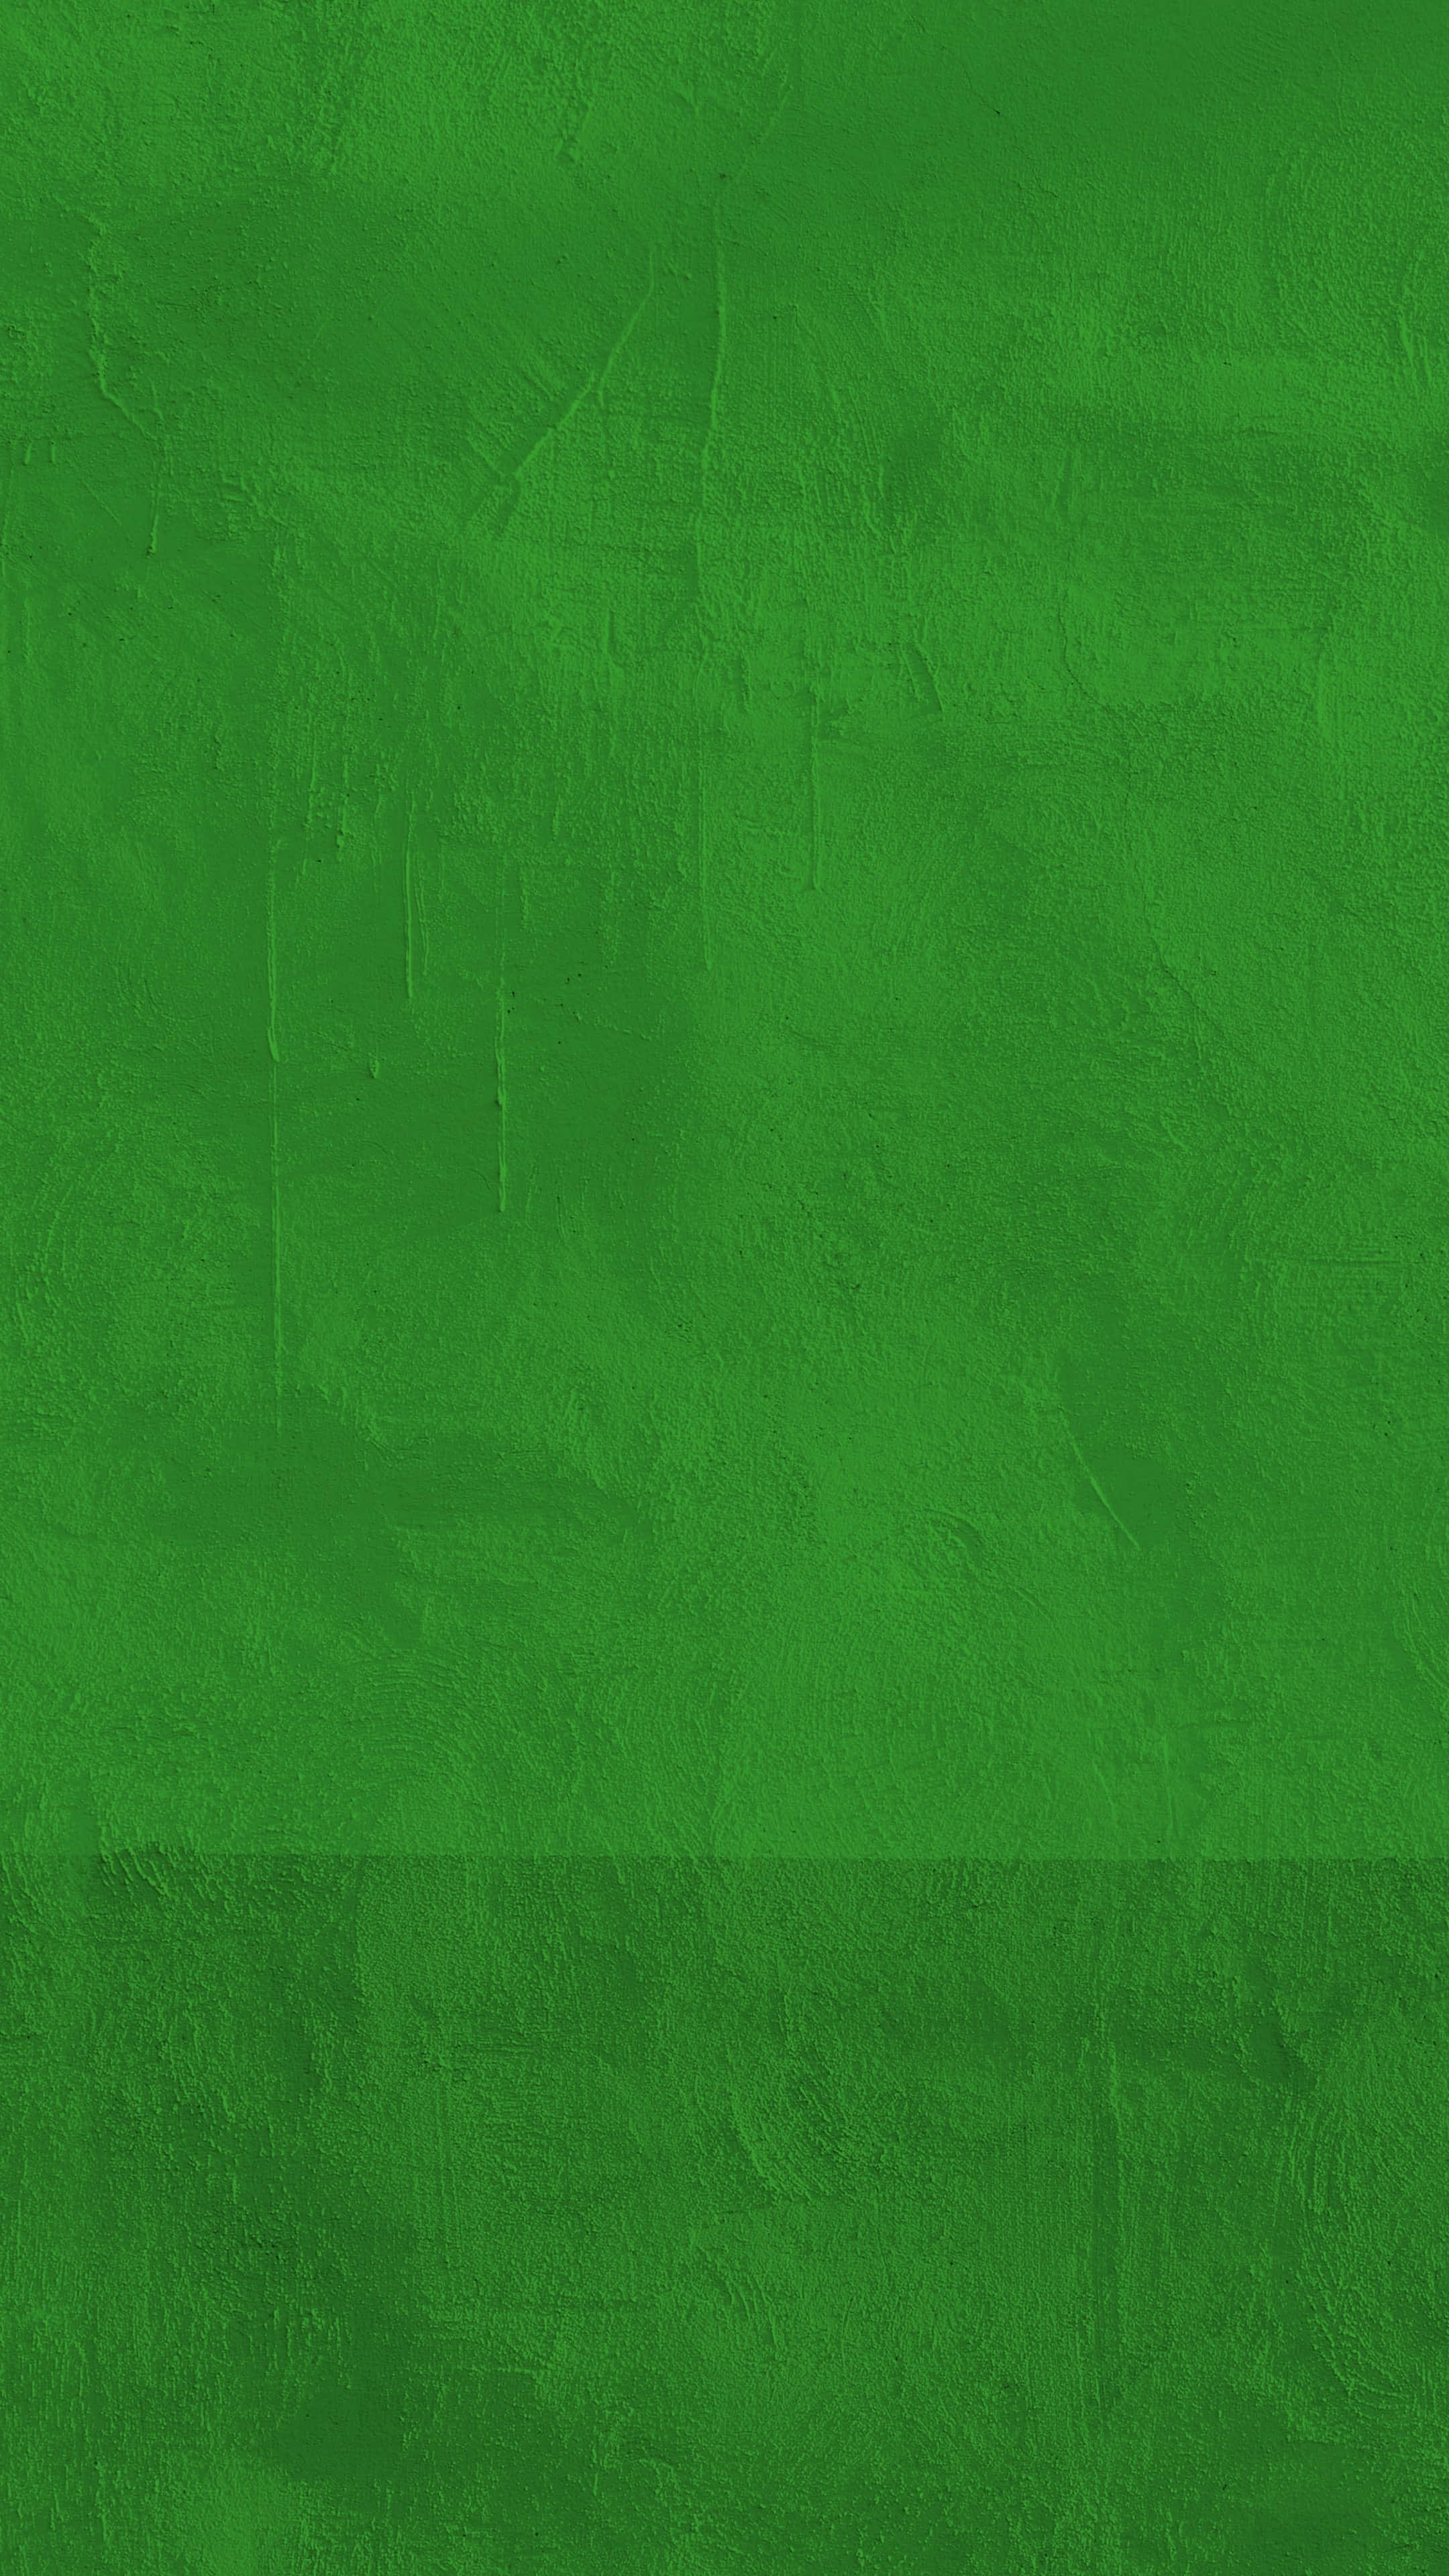 Green 2160 X 3840 Background